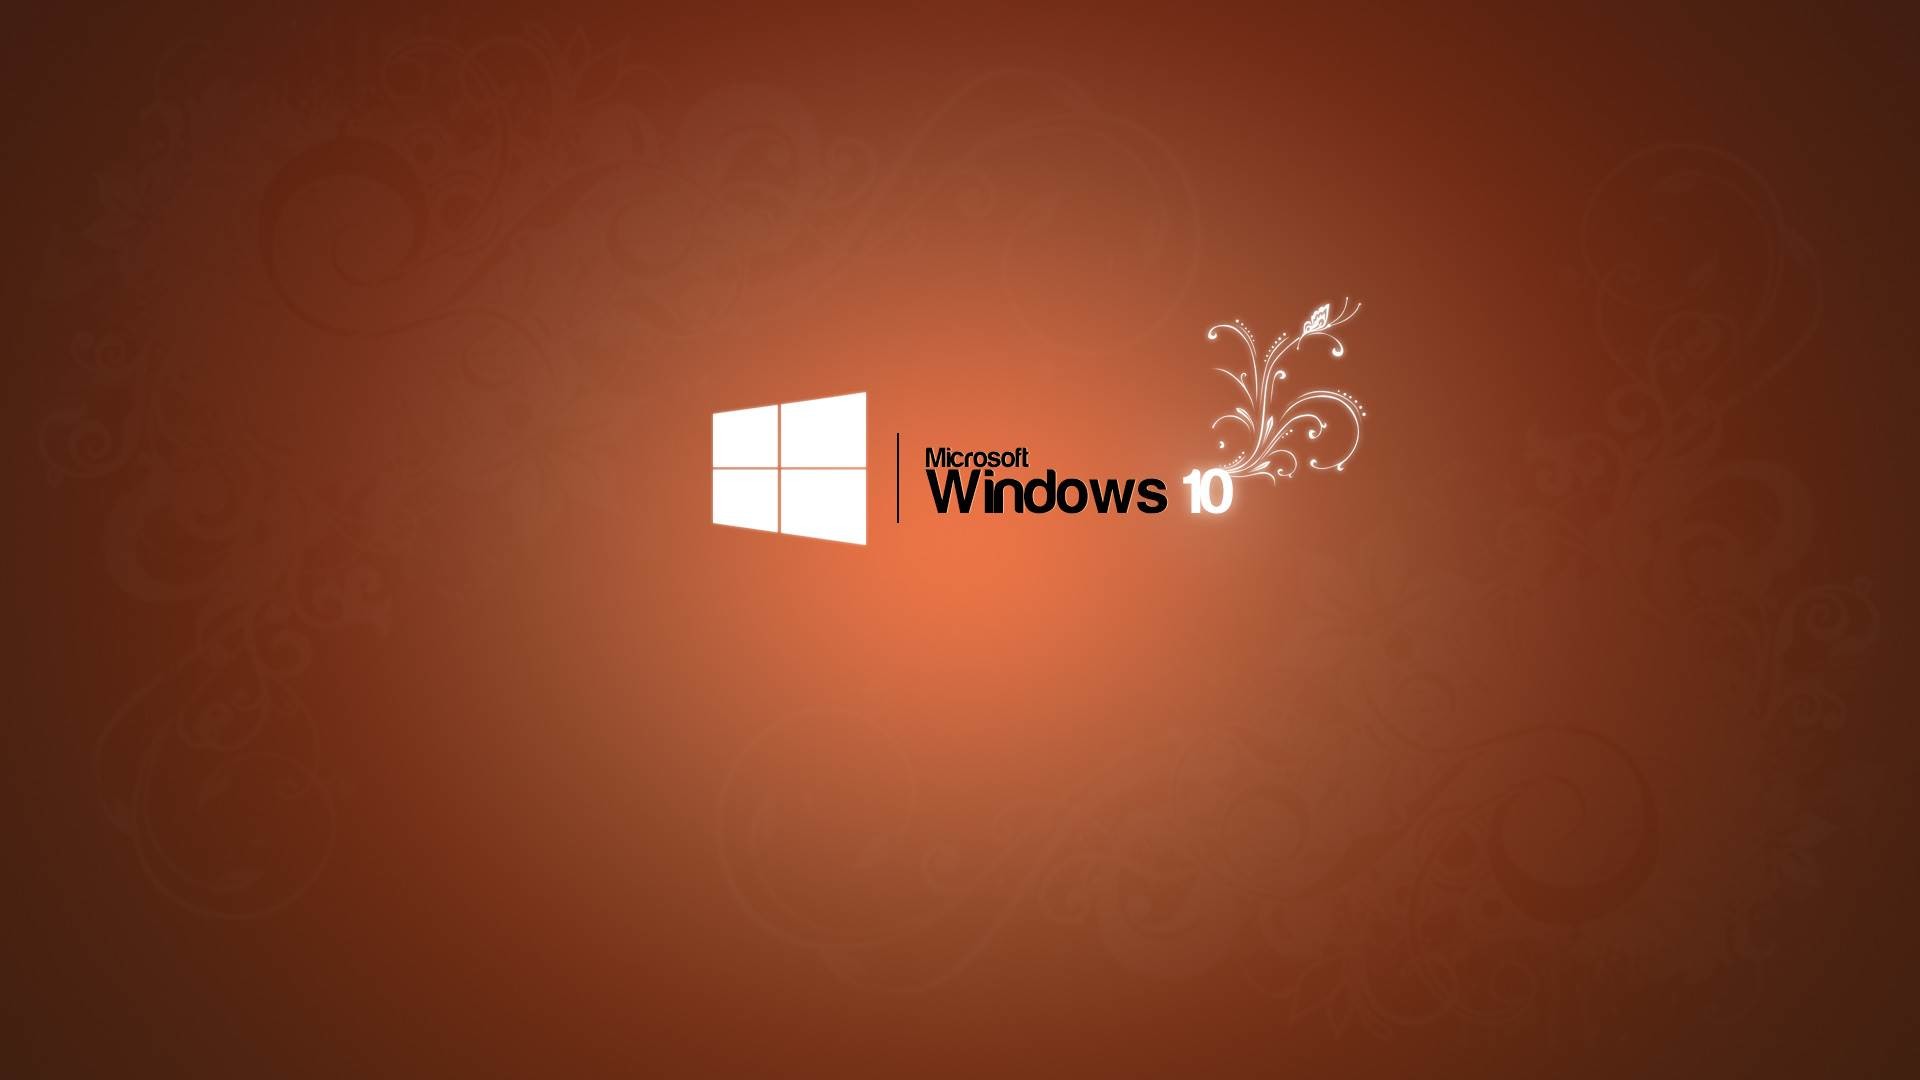 1920x1080 Windows 10 Wallpaper | HD Wallpapers, Backgrounds, Images, Art Photos. Top  10